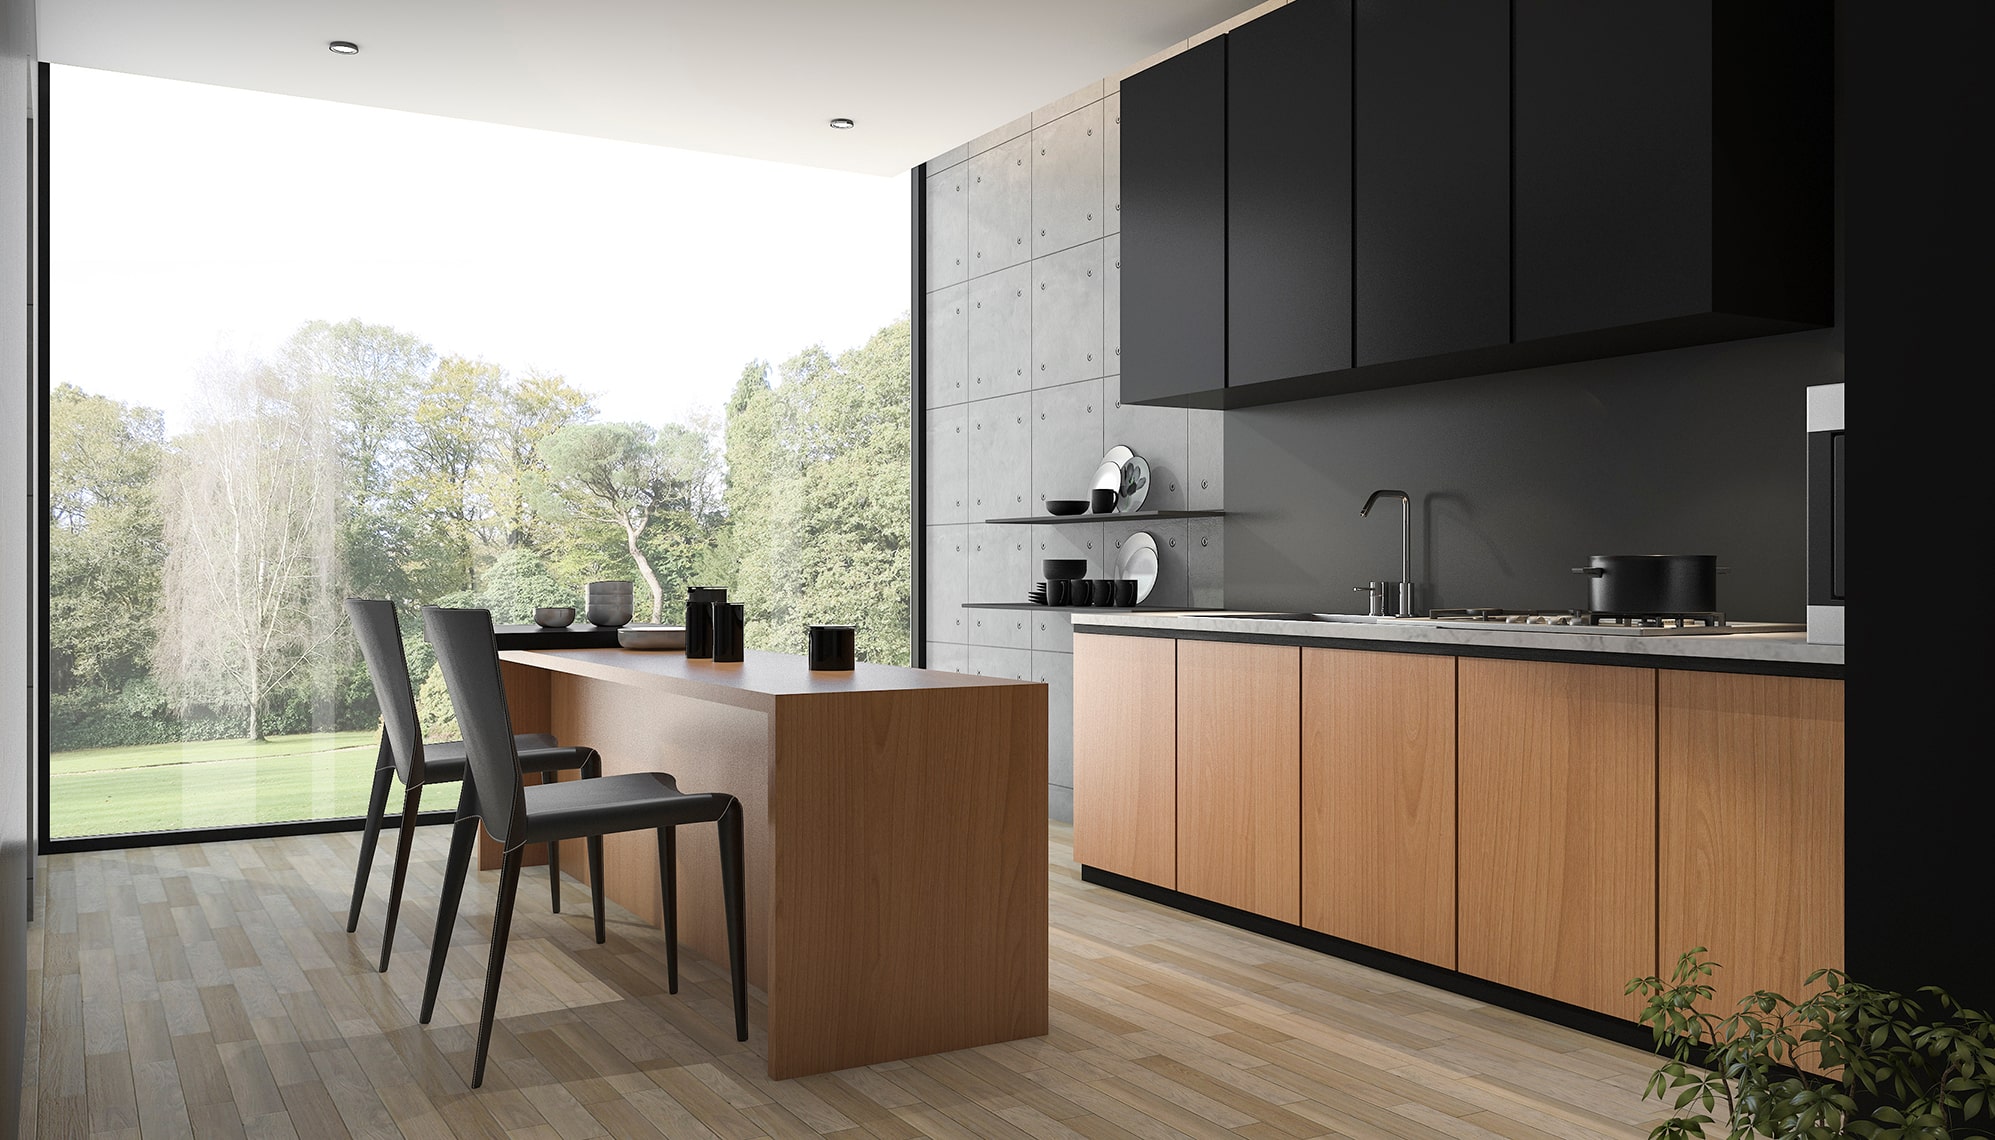 Kitchen render using black laminate cabinets and marine grade plywood panels